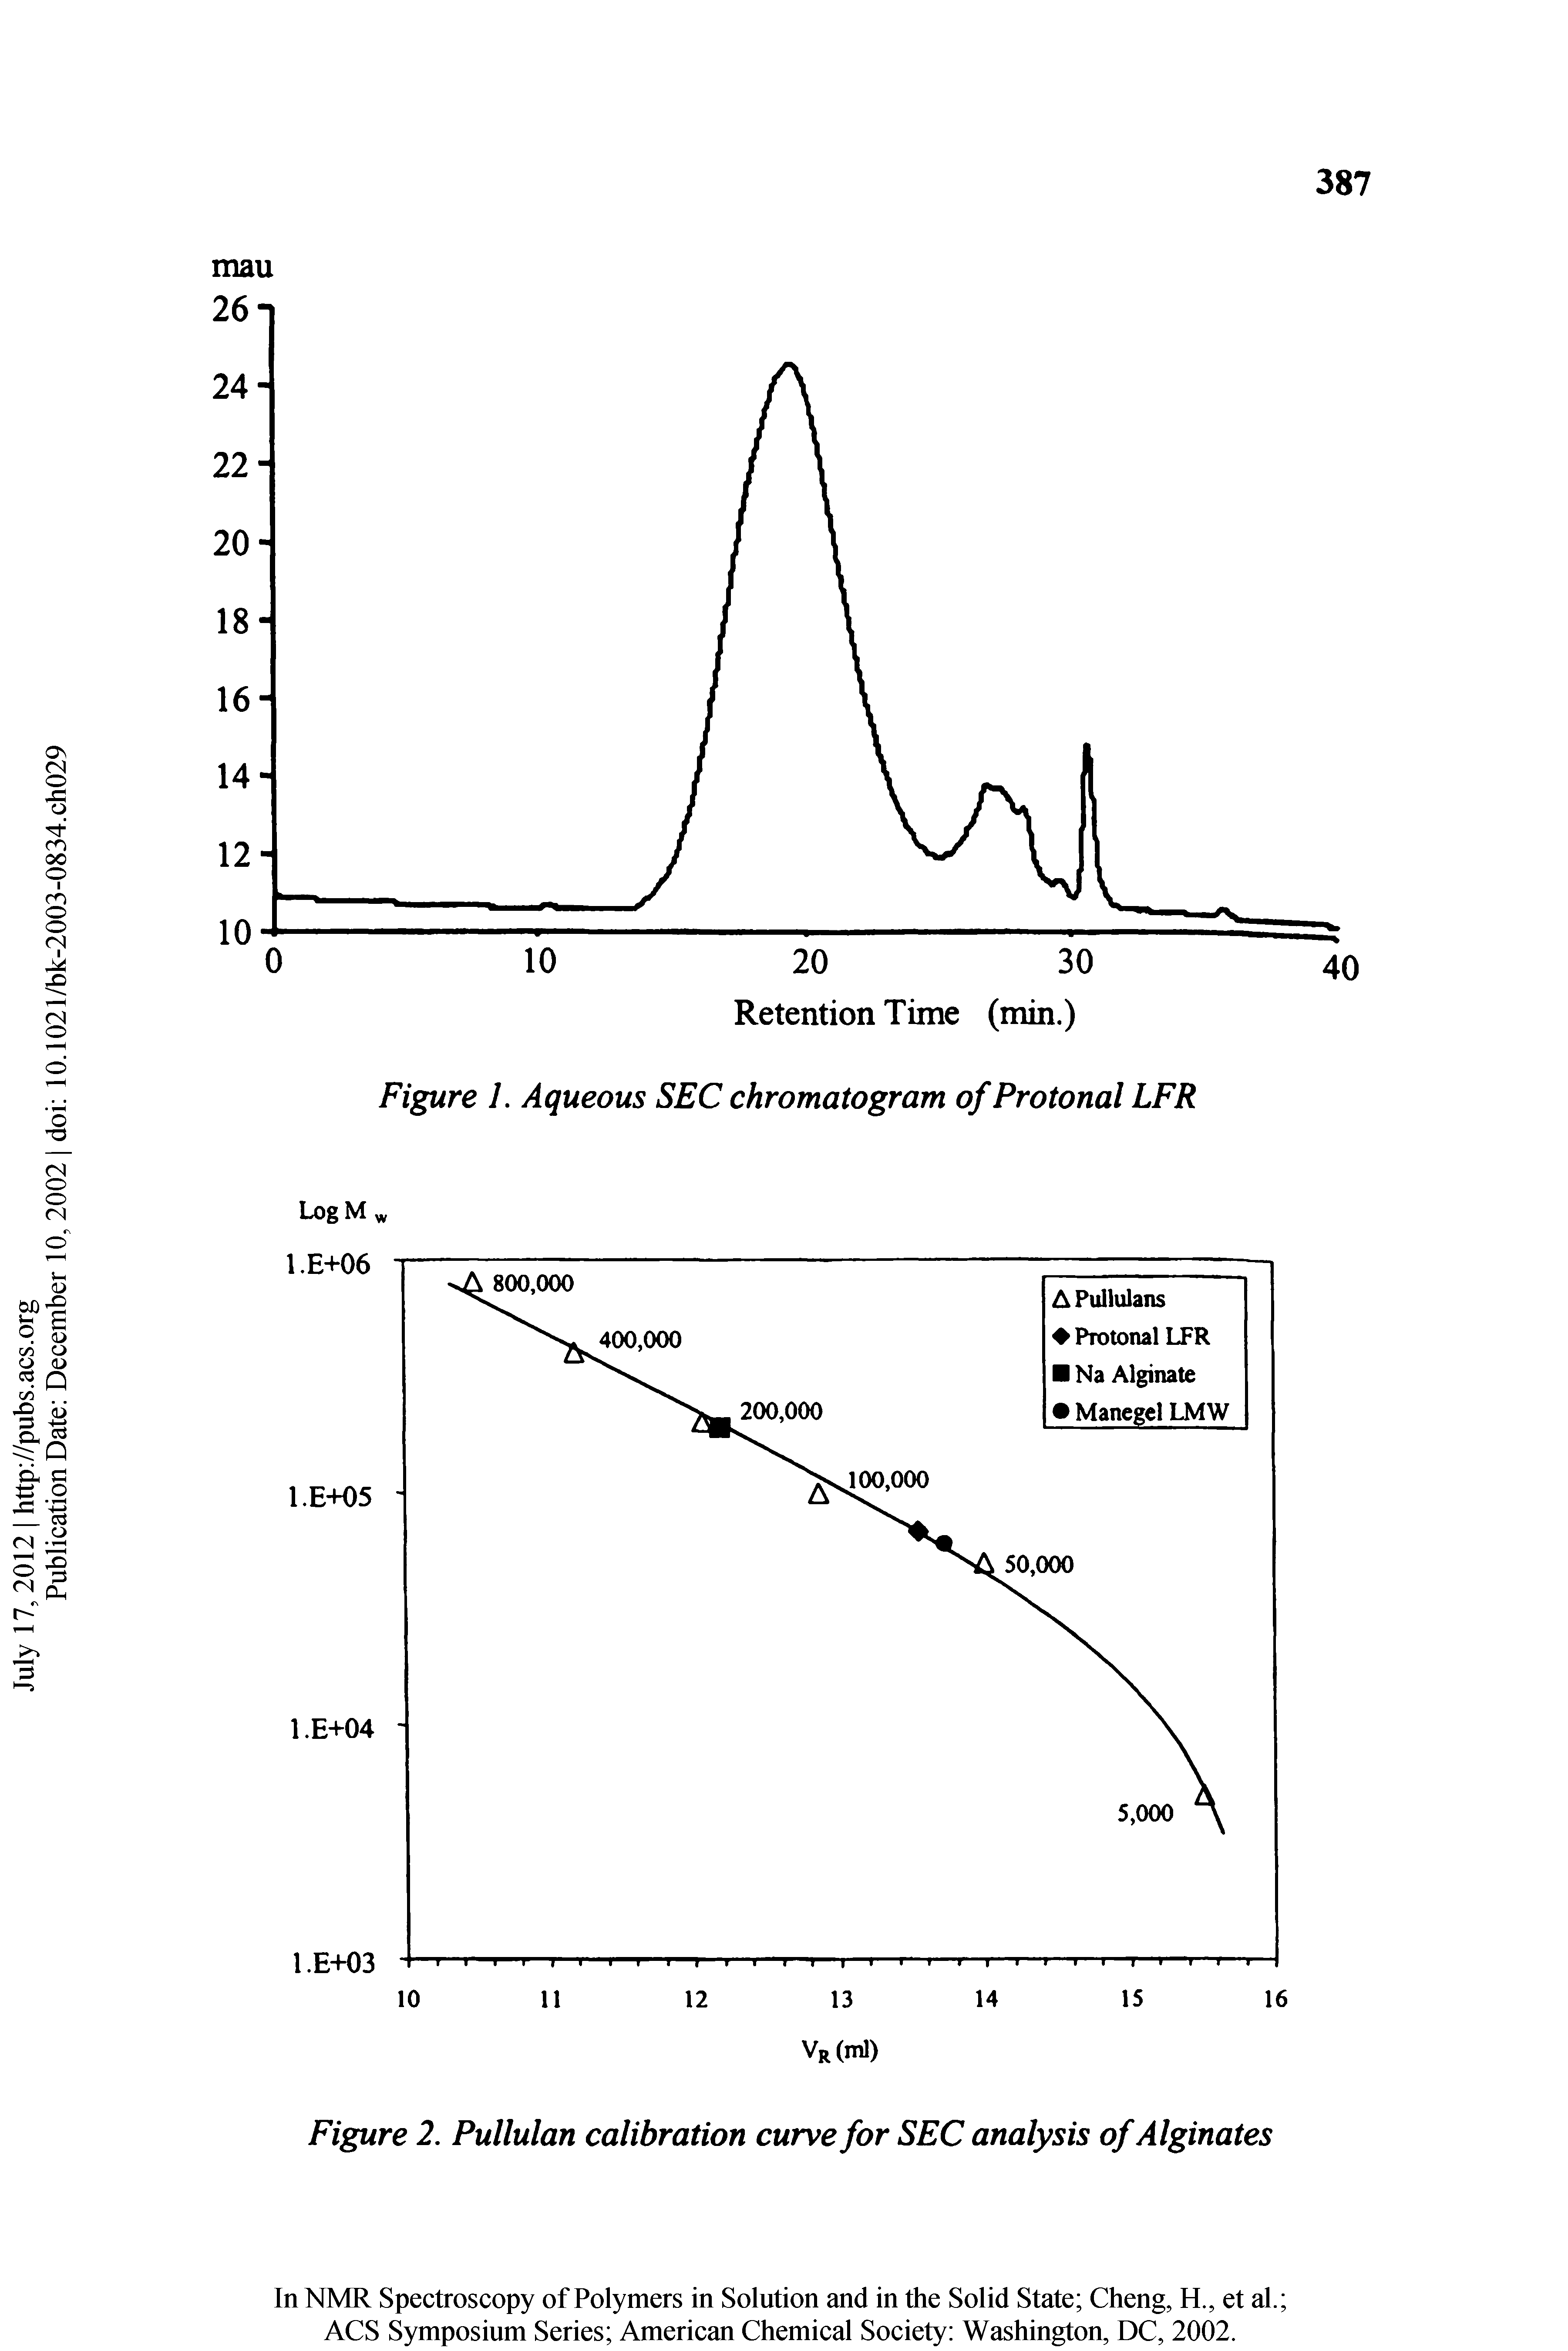 Figure 2. Pullulan calibration curve for SEC analysis of Alginates...